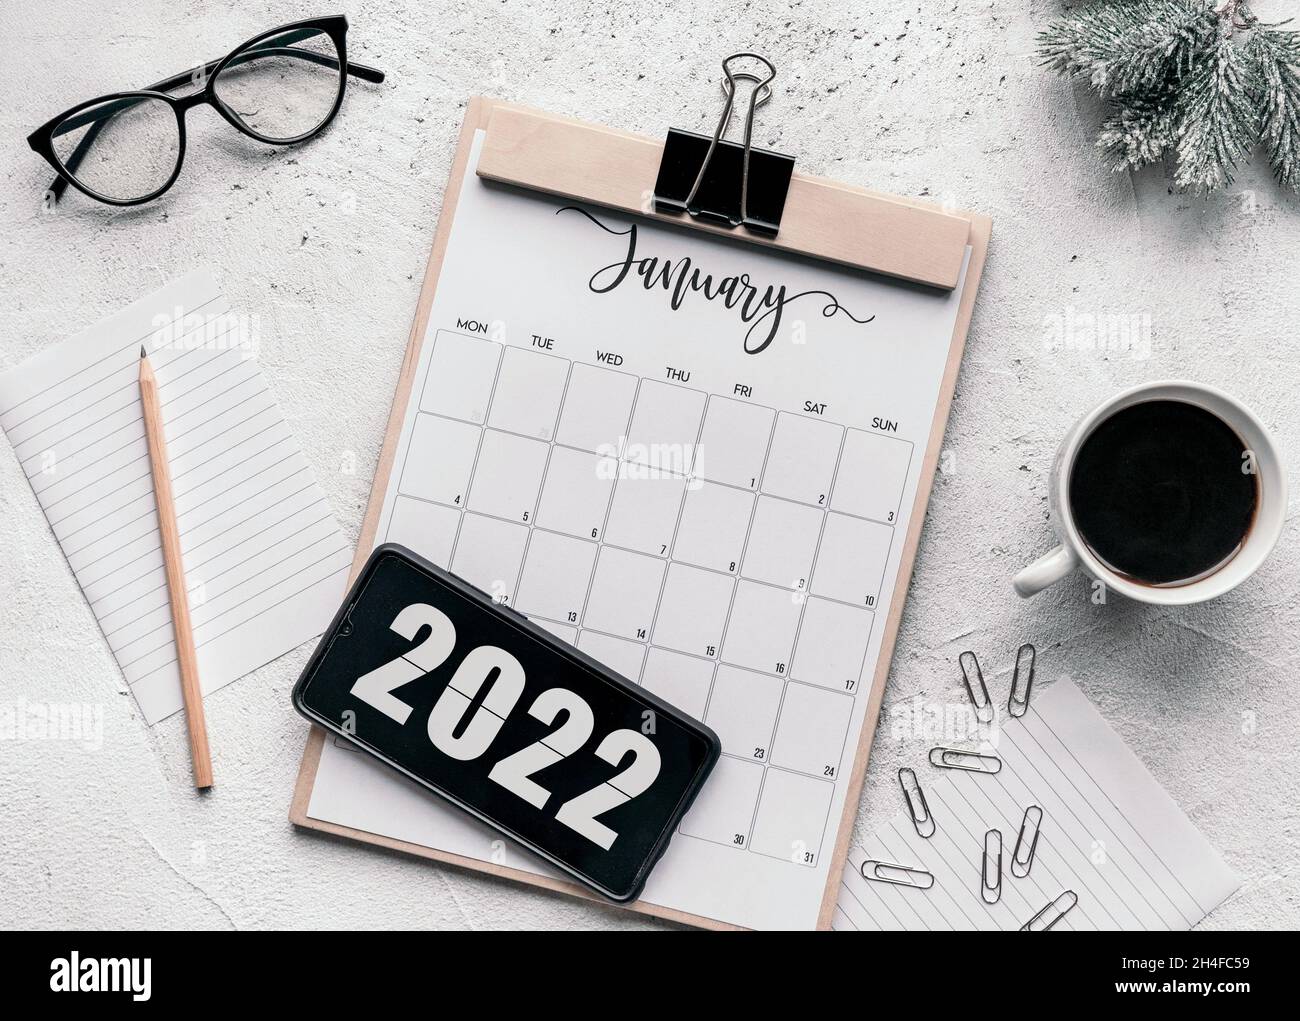 Januar Kalender flach lag. Draufsicht des Januarkalenders auf der Tabelle und des Jahres 2022 auf dem Display des Mobiltelefons. Stockfoto